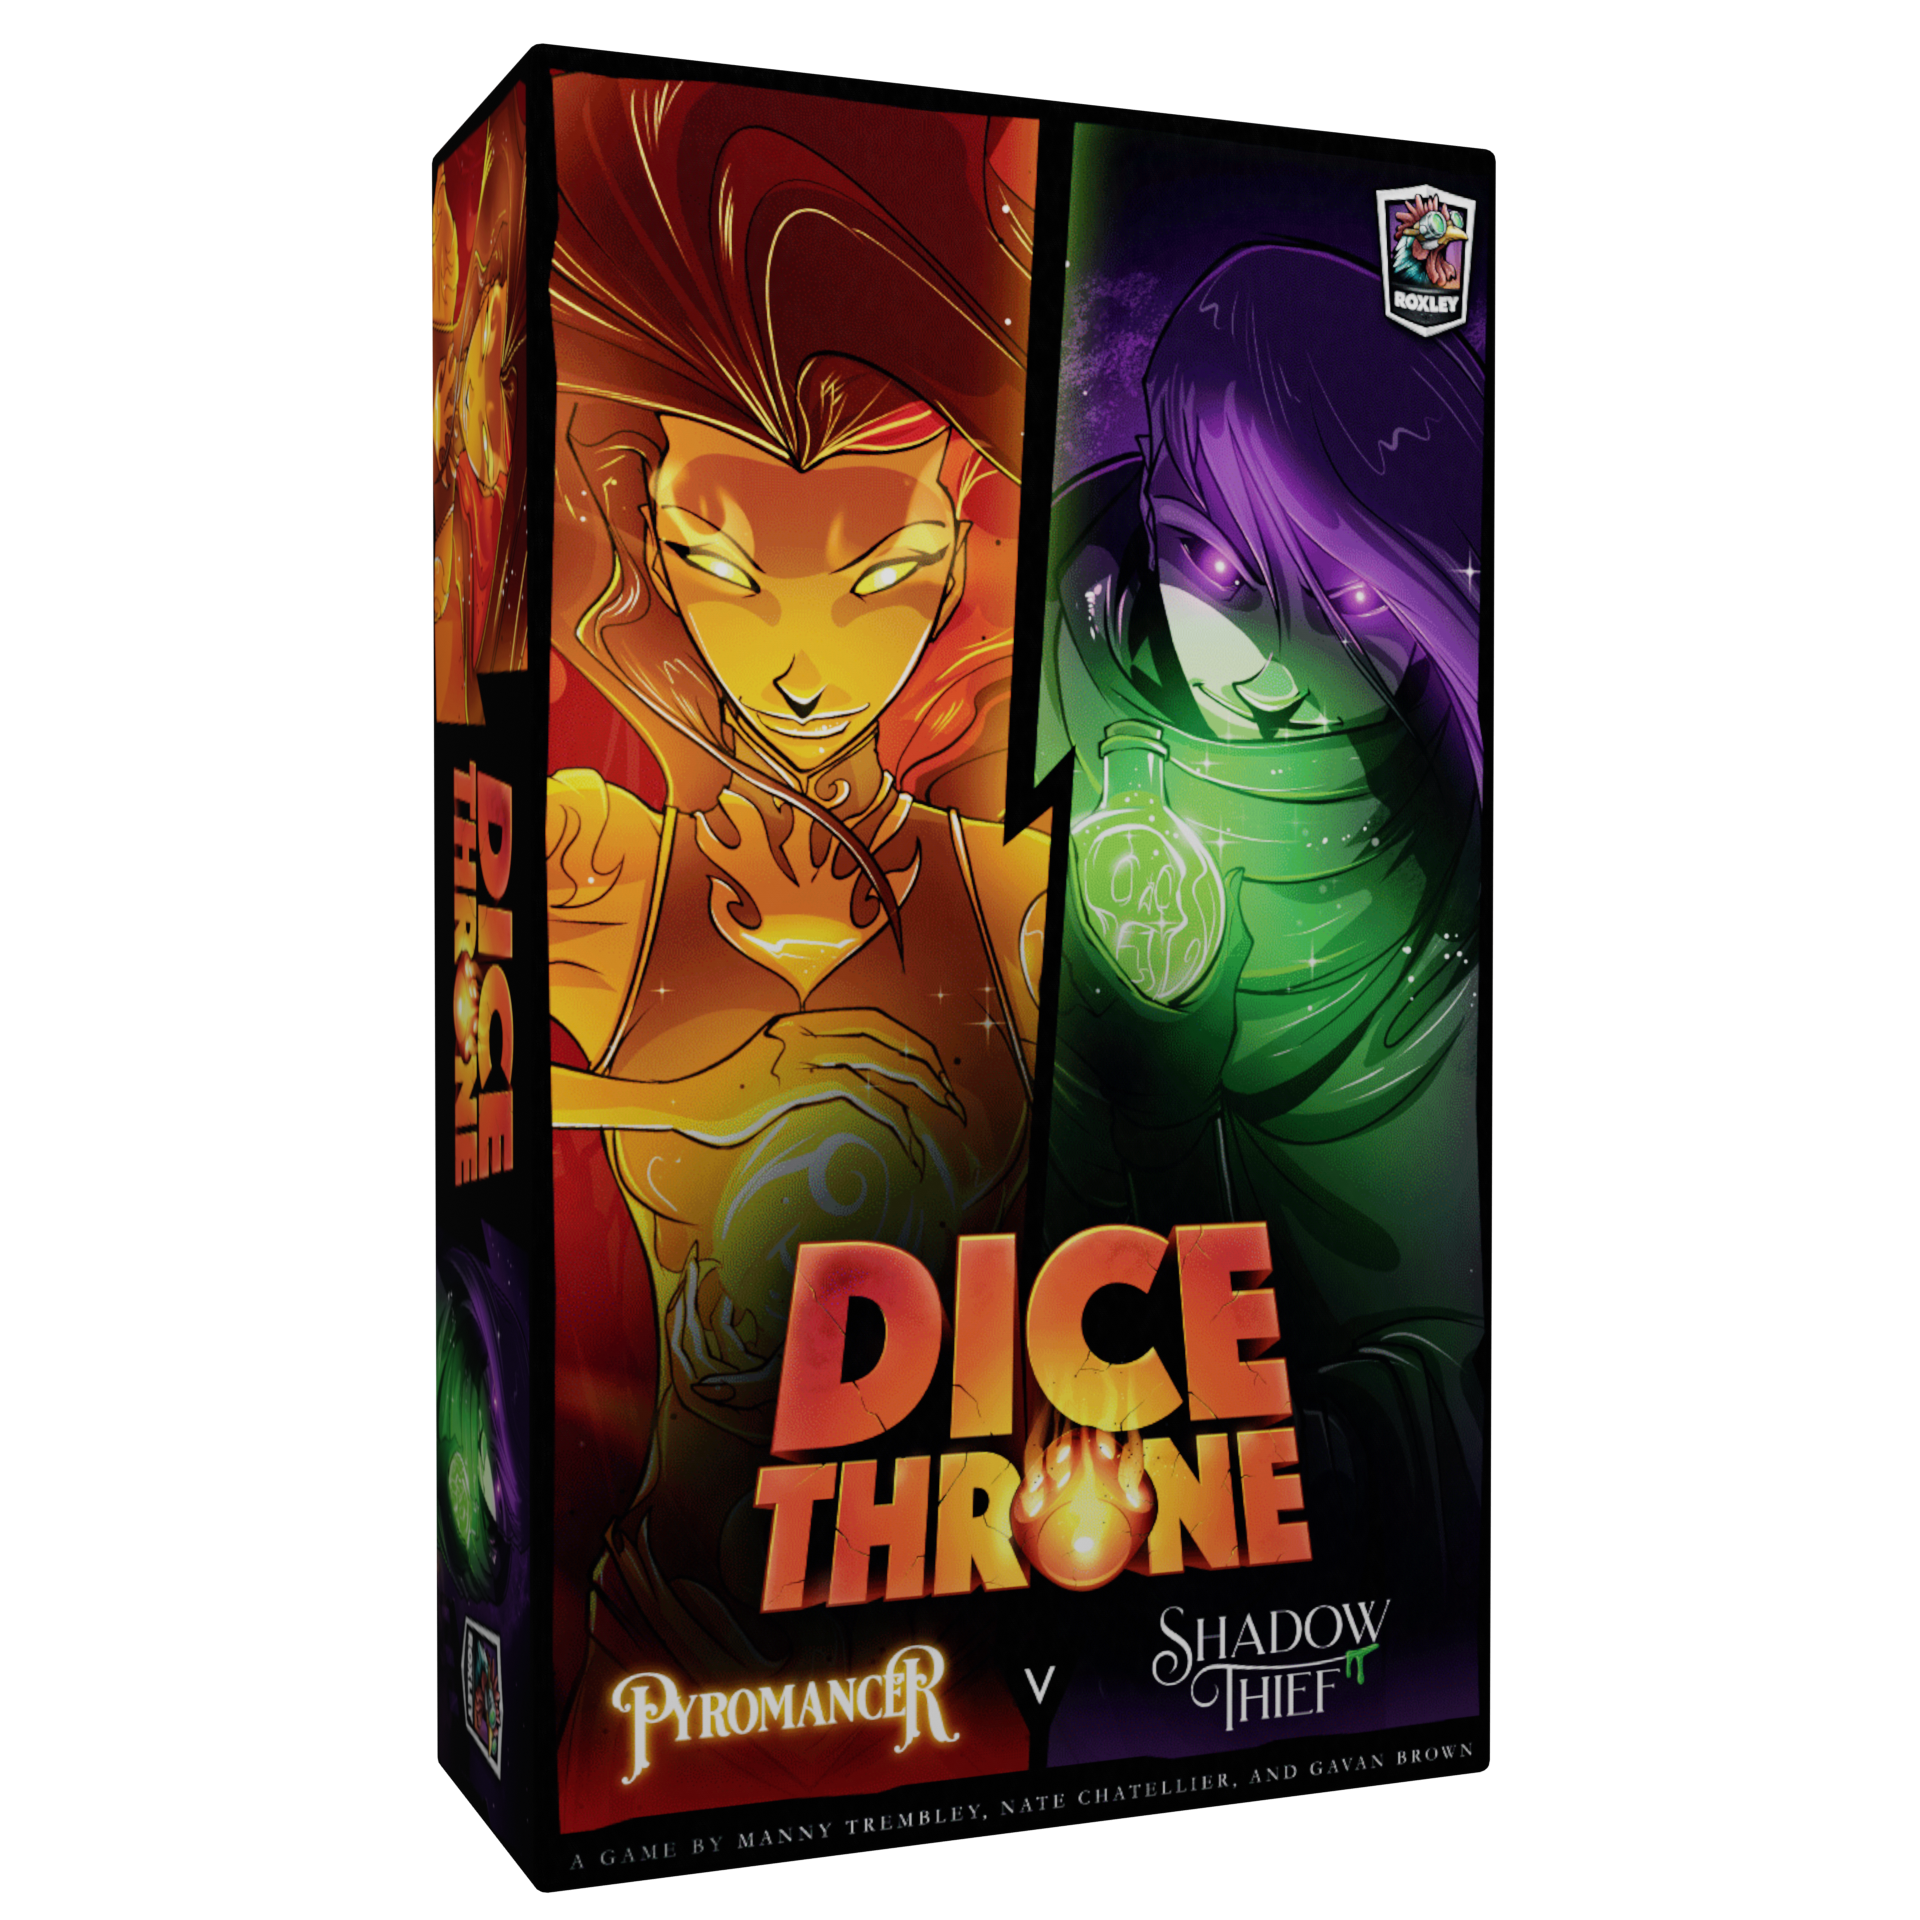 Dice Throne  - Pyromancer v Shadow Thief